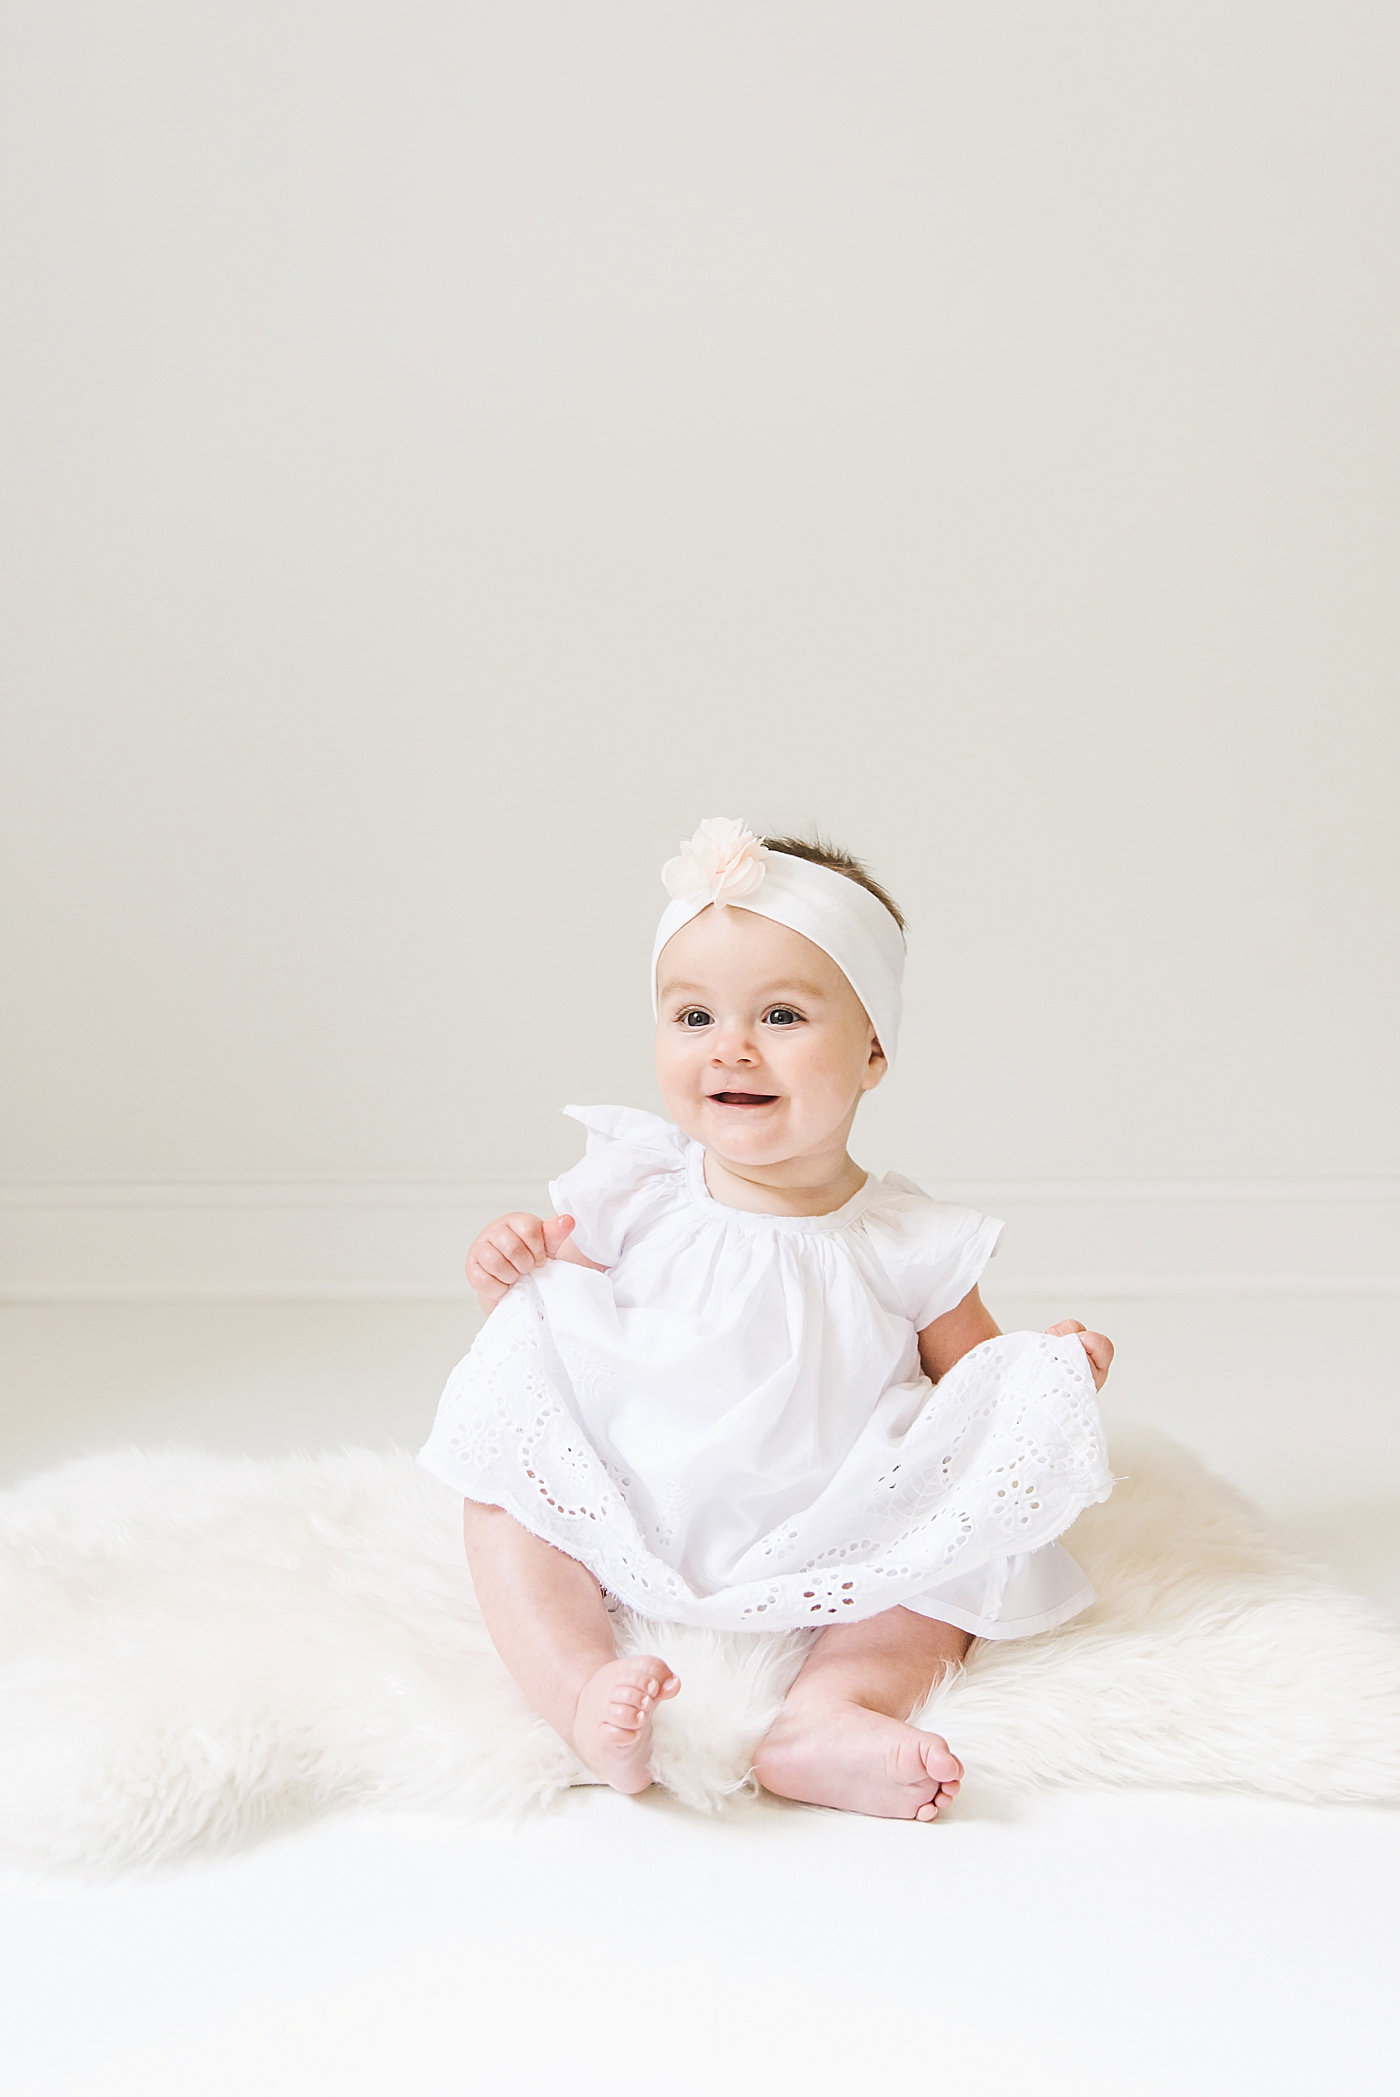 Baby girl in white dress sitting in the studio | Baby photographer in Charlotte Anna Wisjo